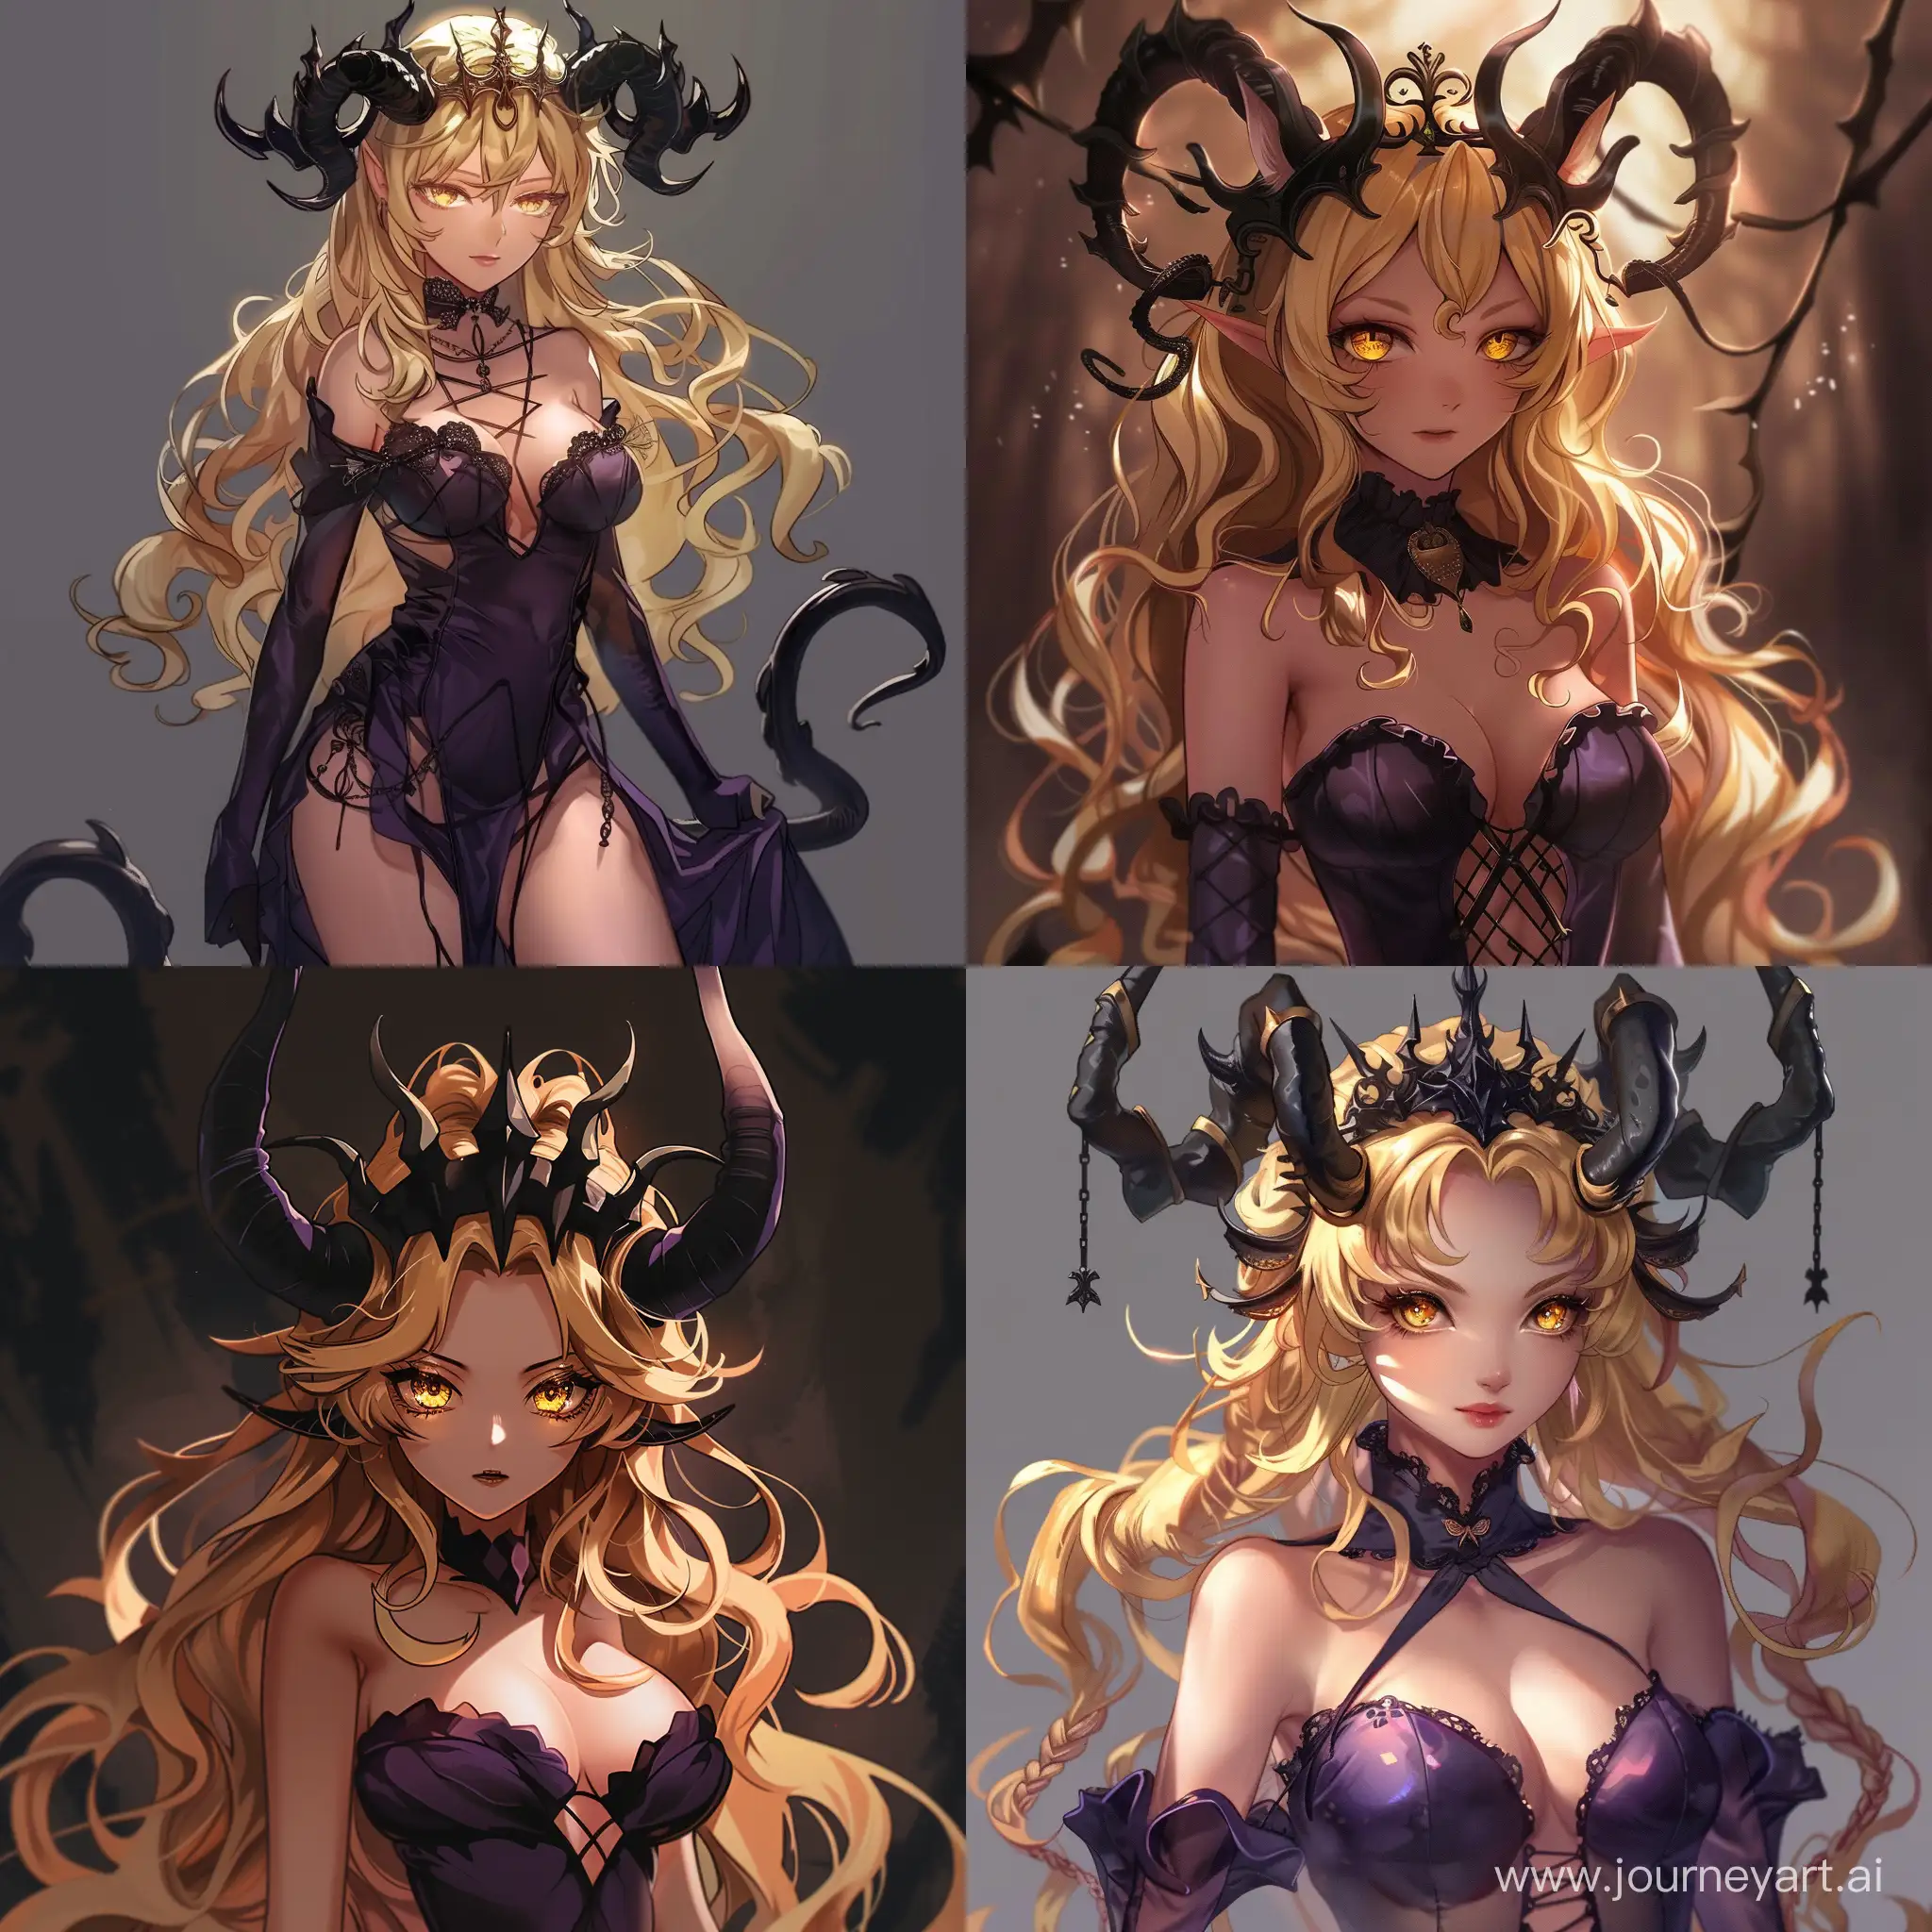 Anime-Demon-Woman-Blonde-Hair-Golden-Eyes-Twisted-Horns-and-Dark-Purple-Dress